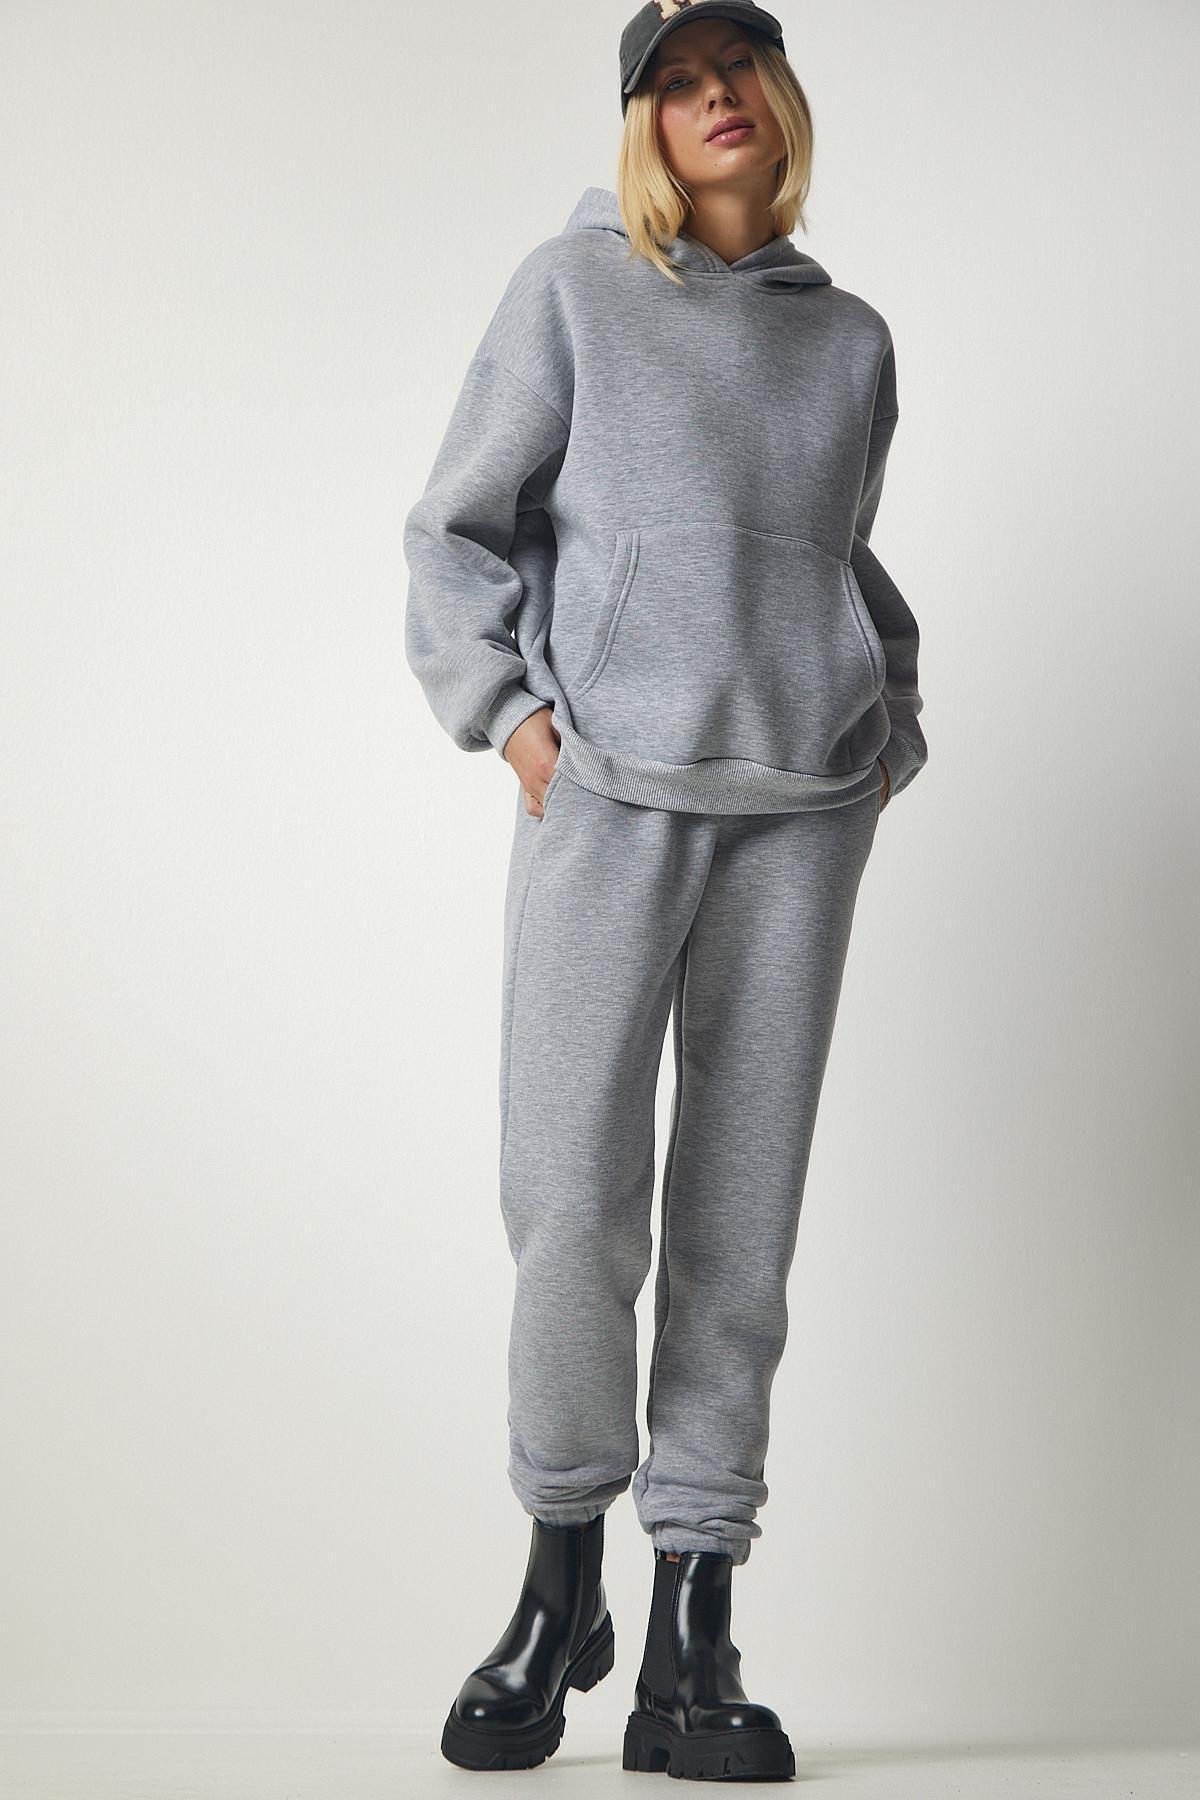 Grey Sweatsuit Co-Ord Set